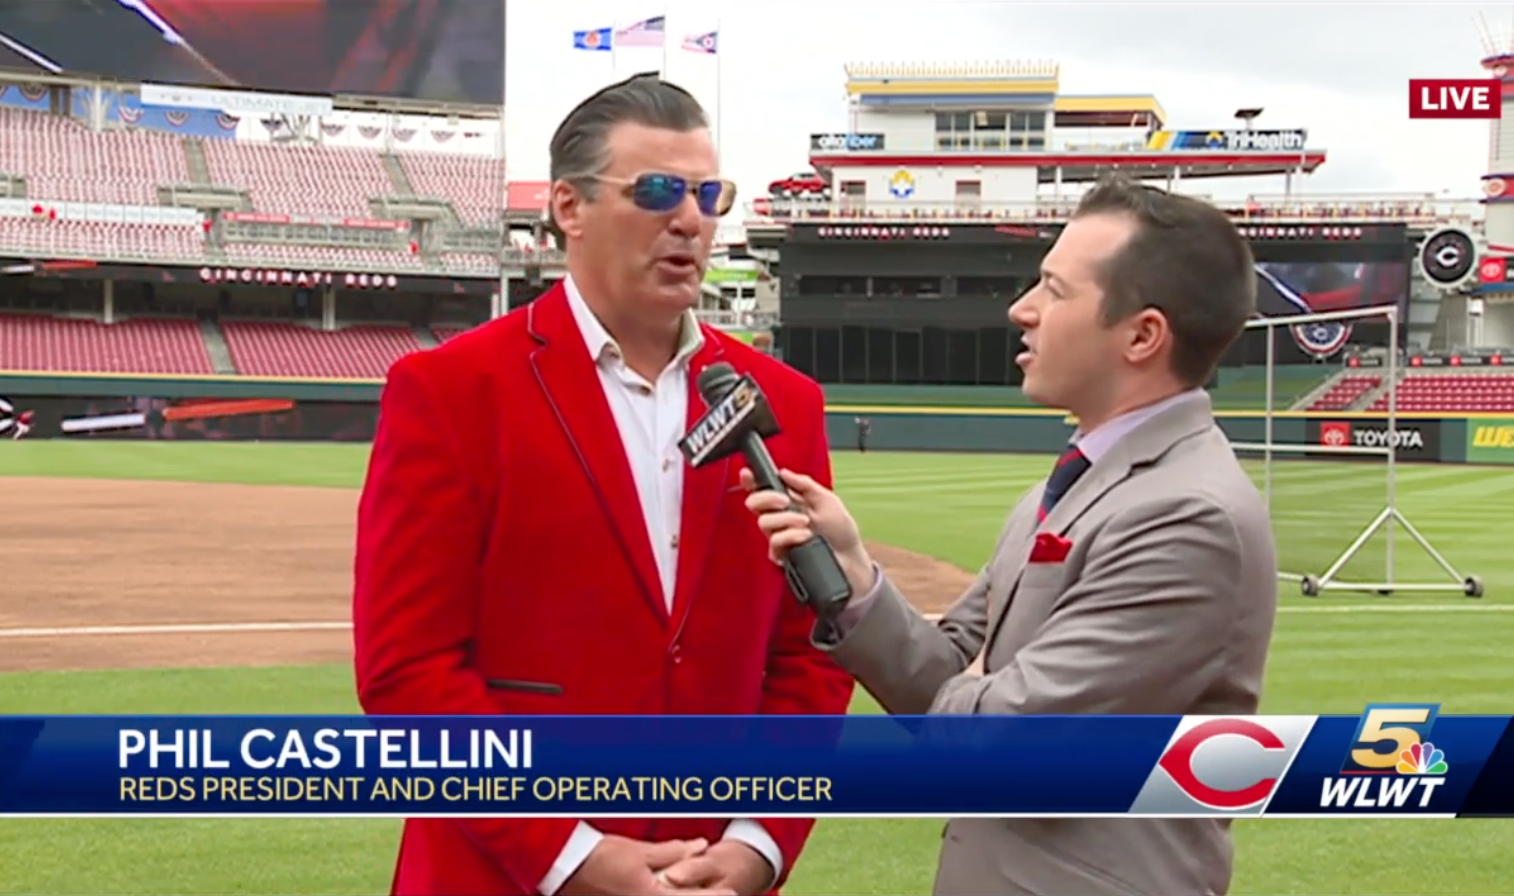 Cincinnati Reds team president Phil Castellini, seen here preparing to make an ass of himself on TV.